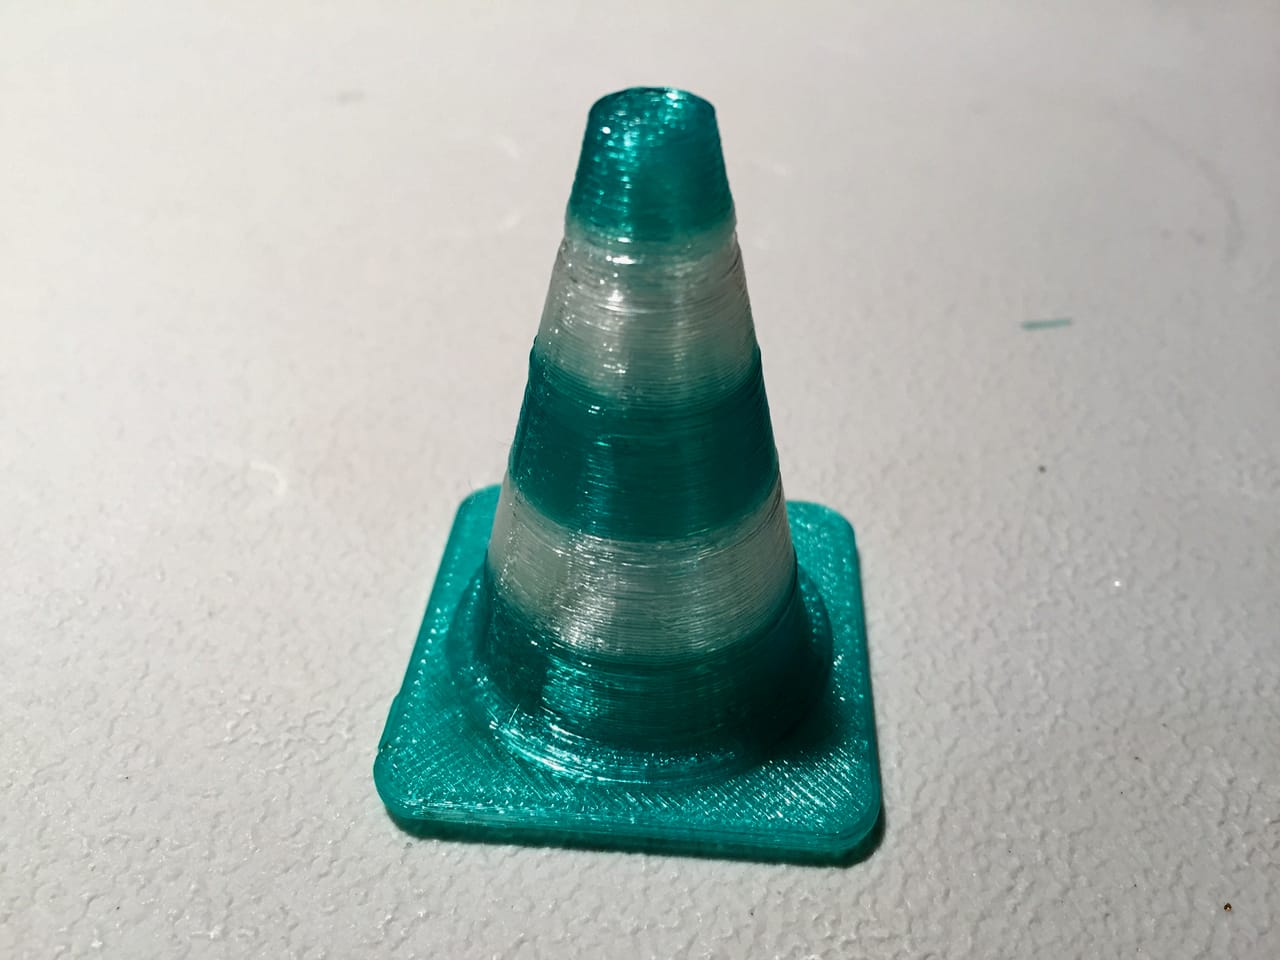  A two color 3D print made on the XYZprinting da Vinci Jr. 2.0 Mix 